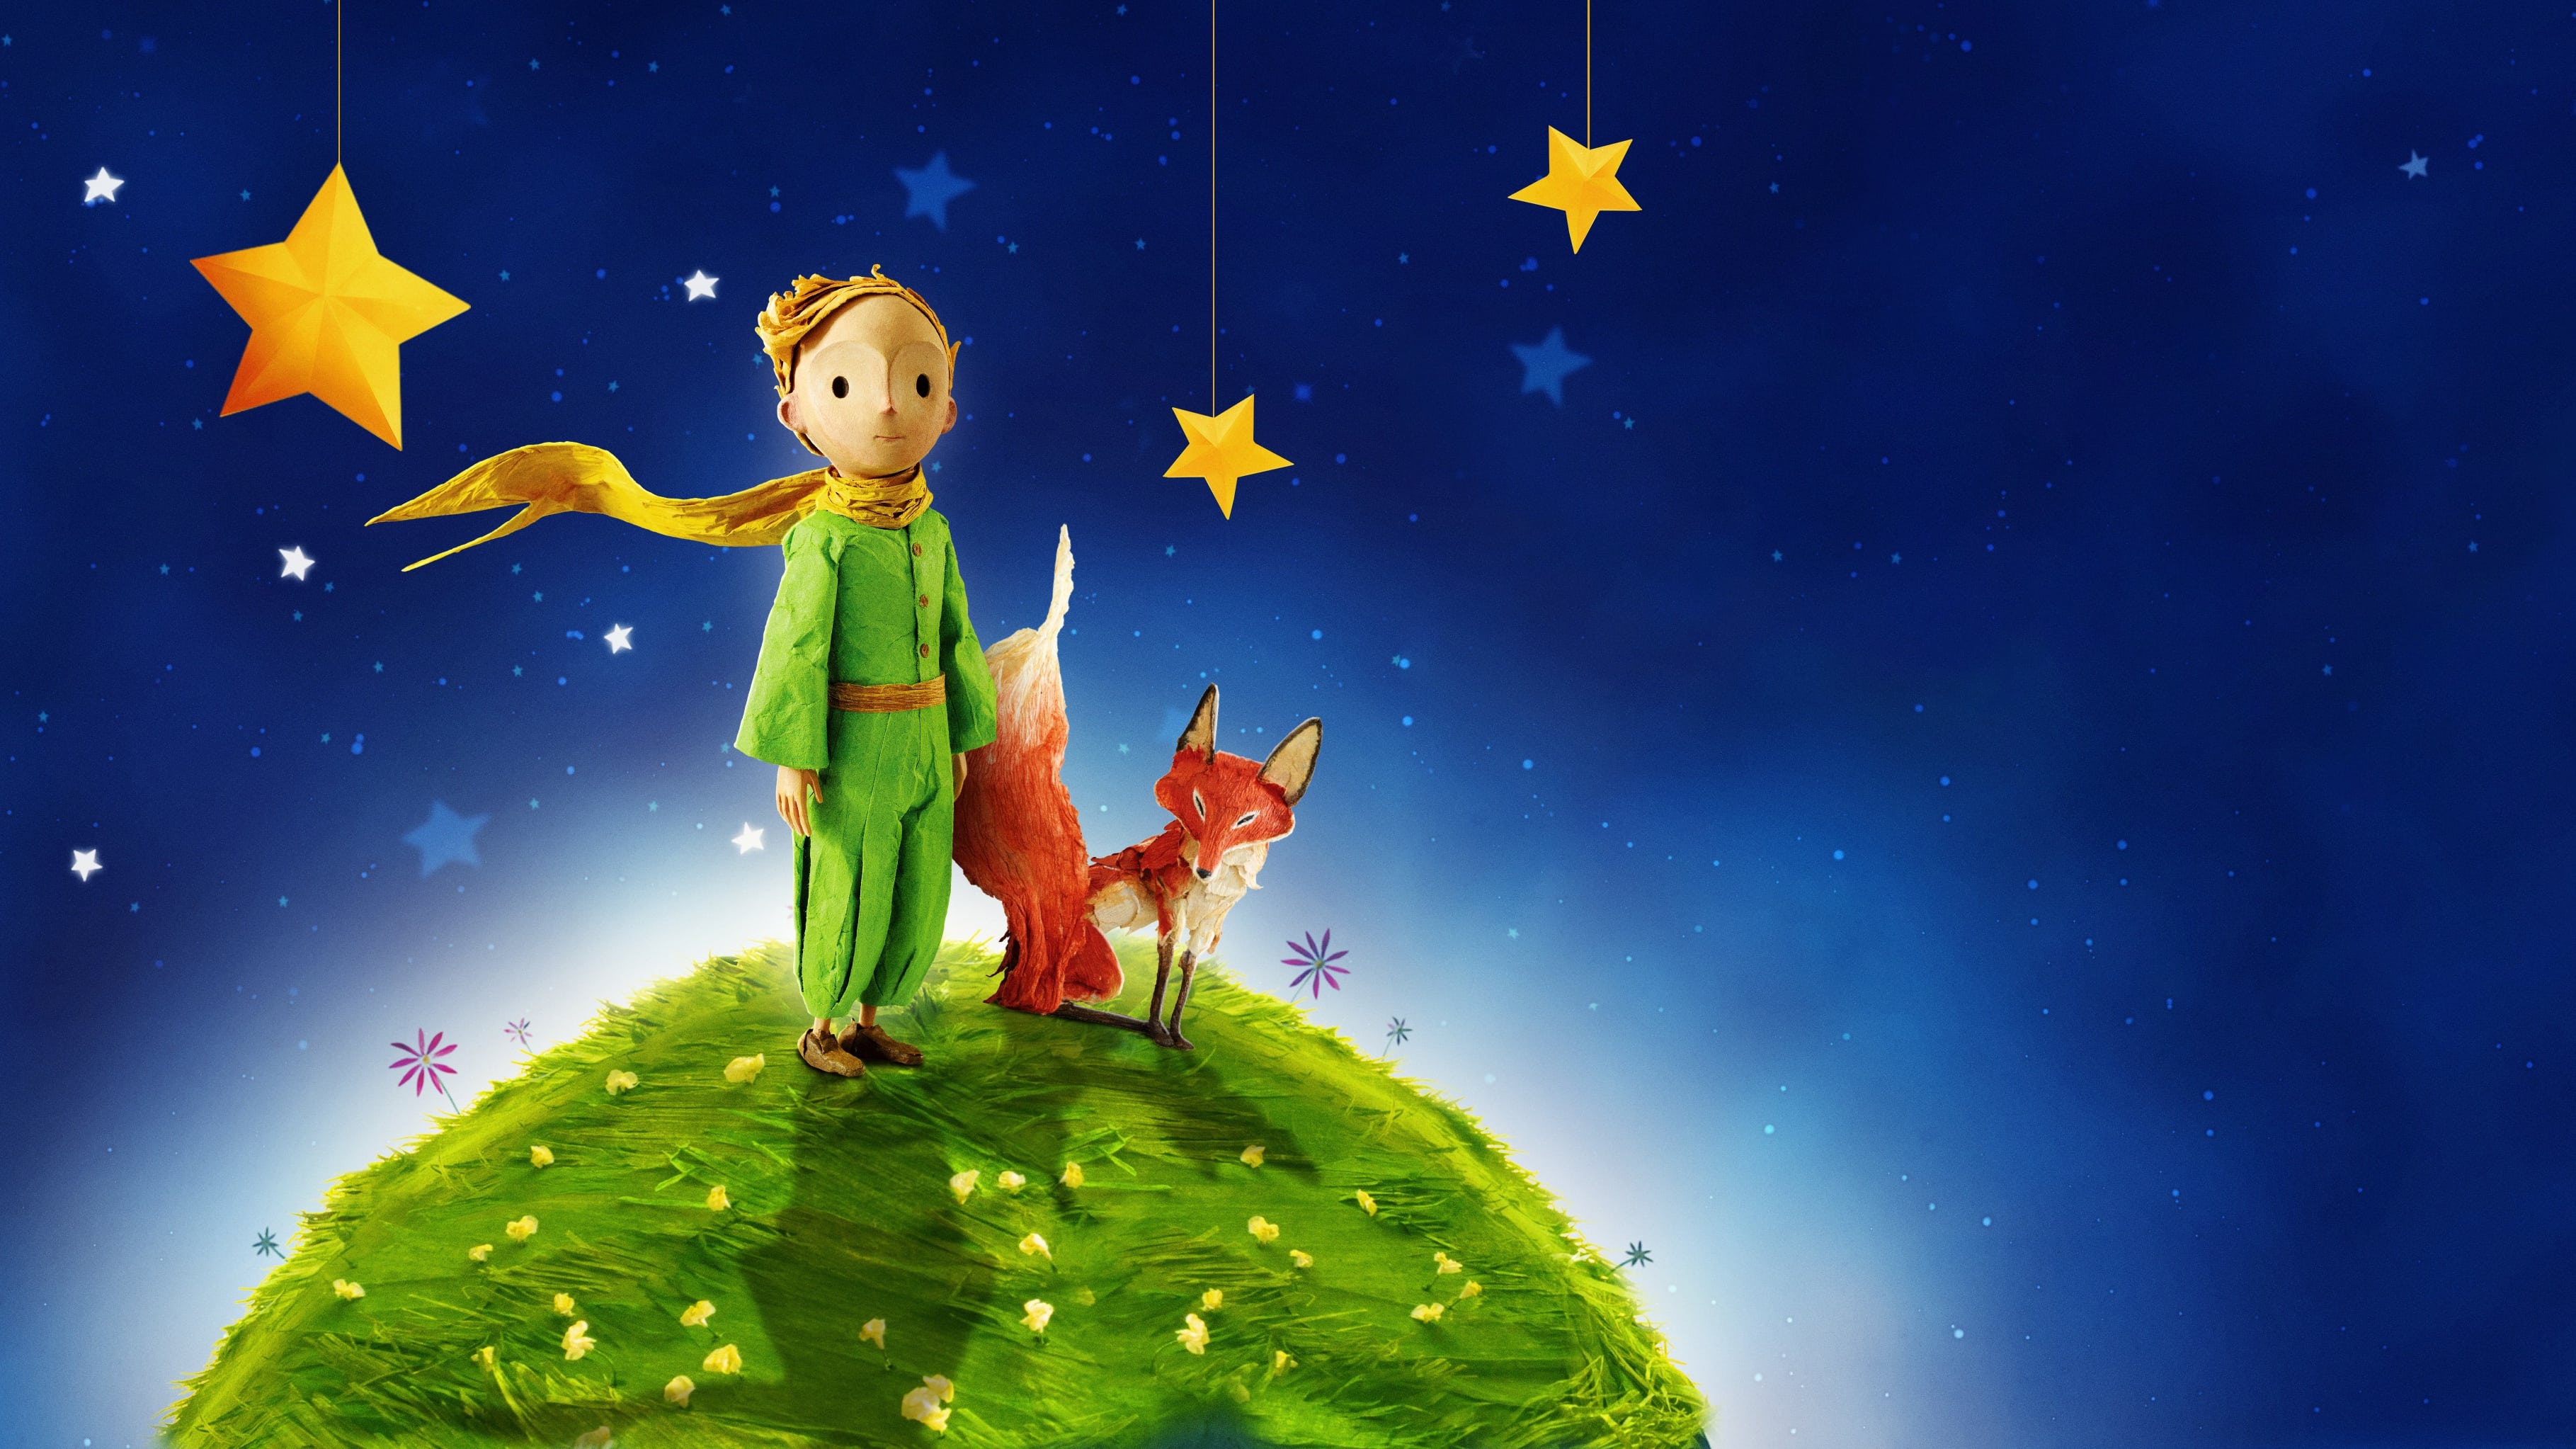 Image du film Le Petit Prince 9uvlo4k6gxjqk3dq7lu8bpz6mnfjpg